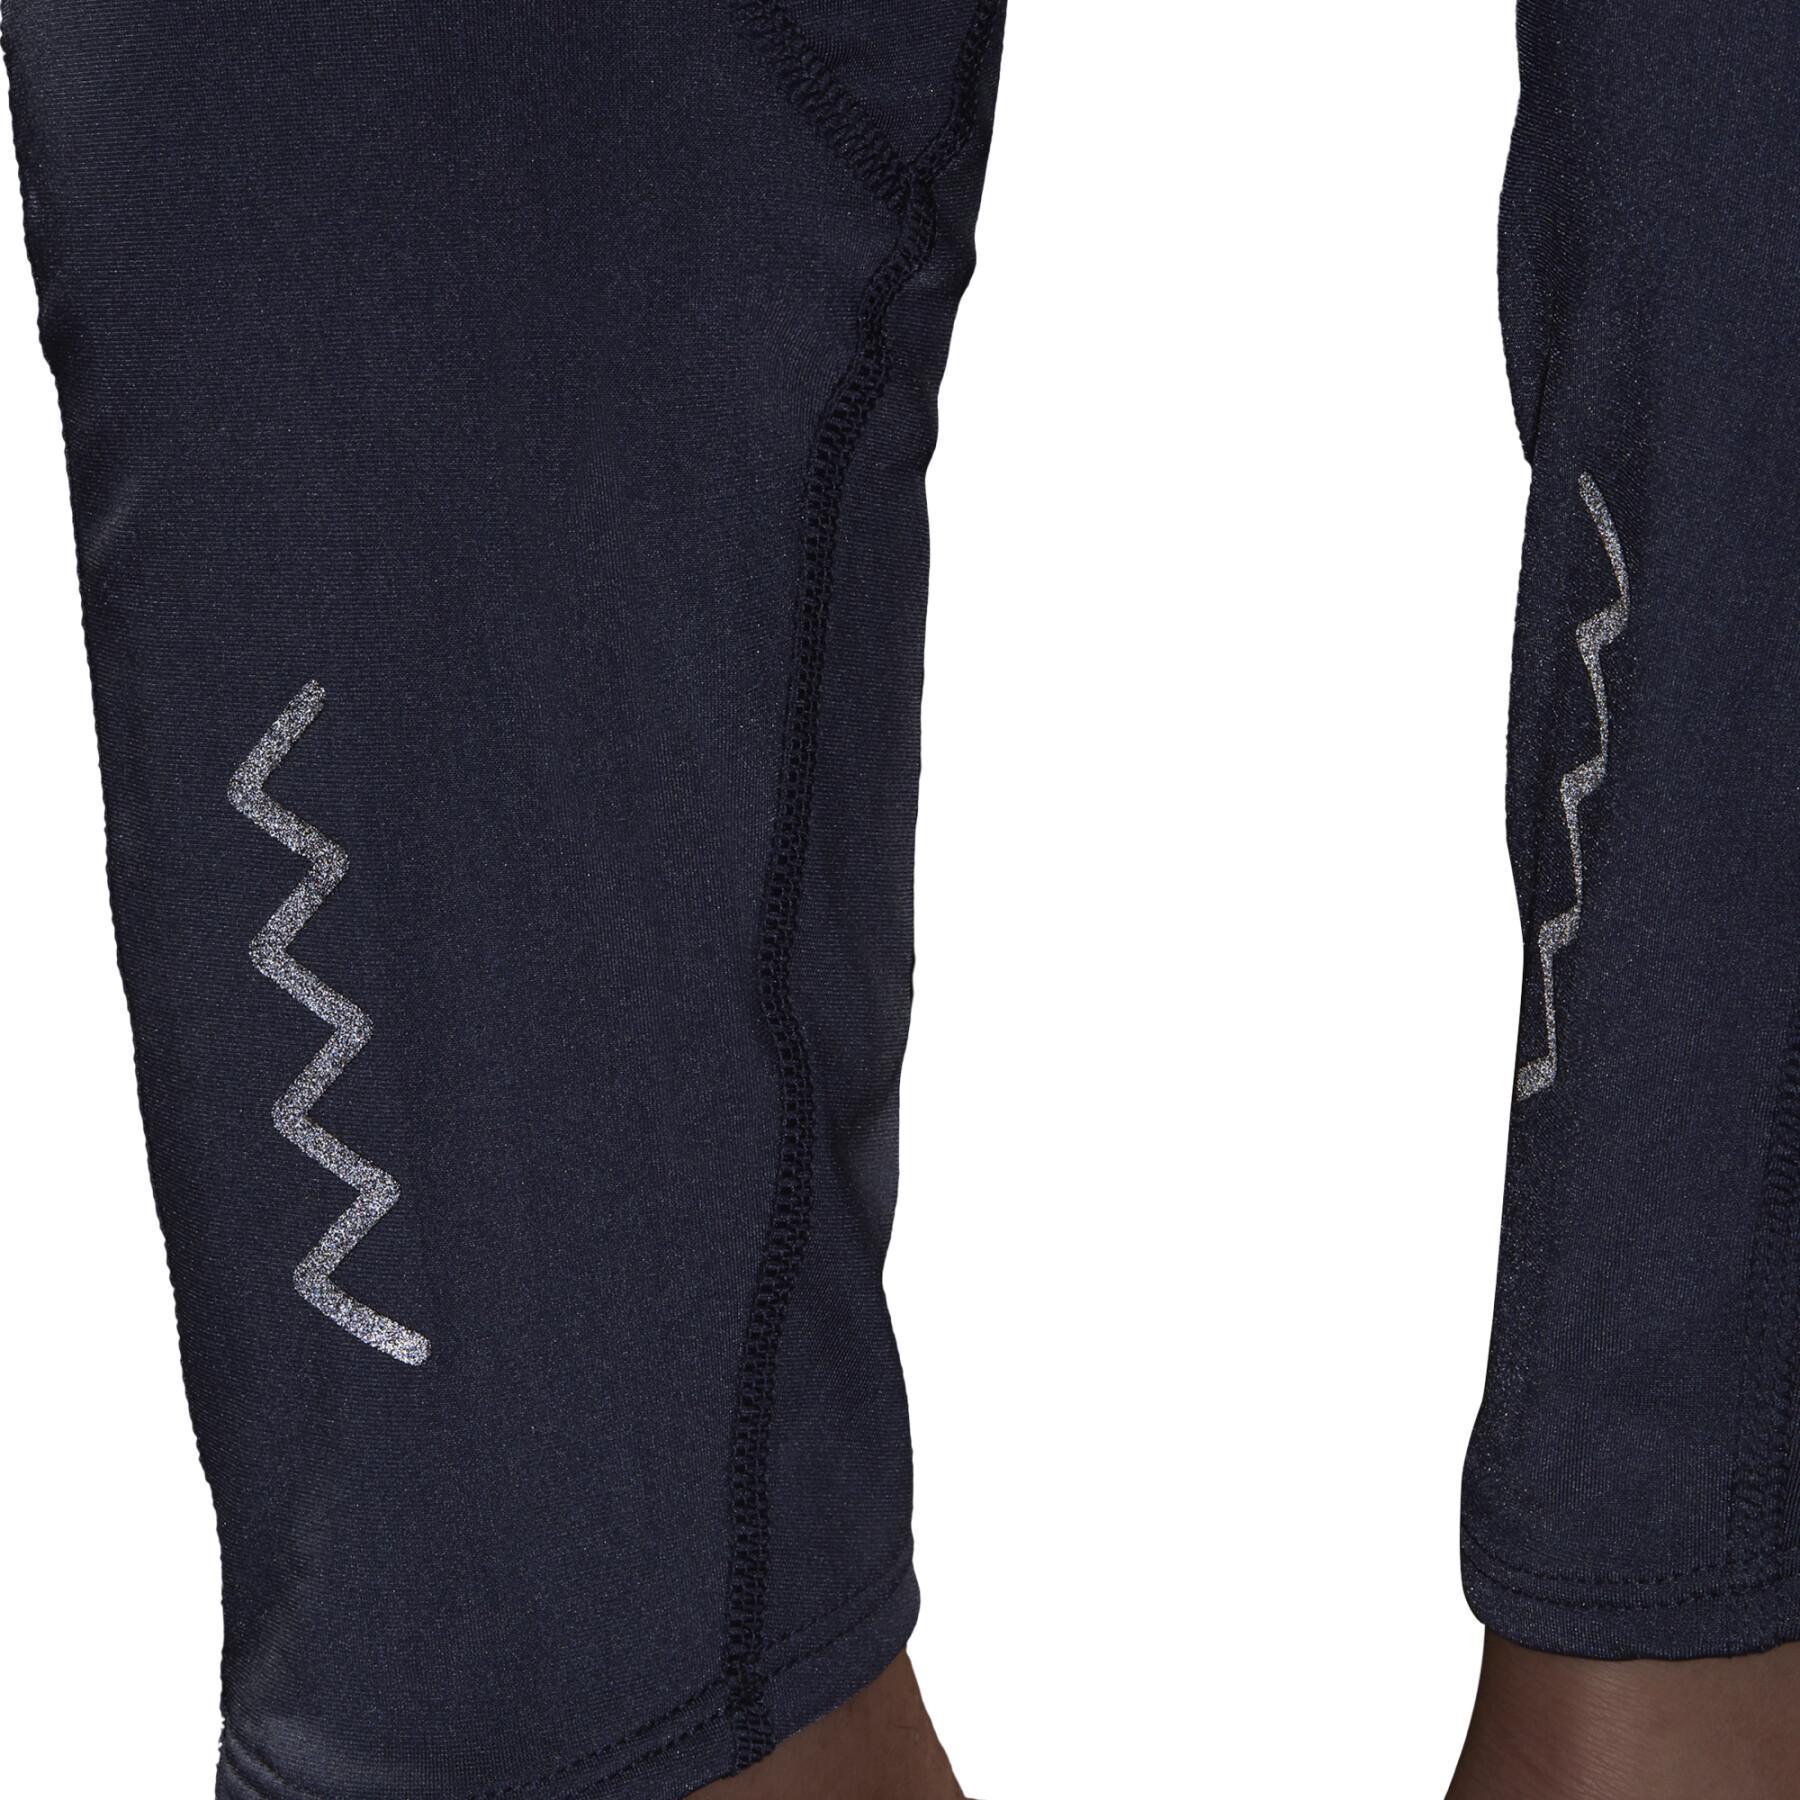 Women's leggings adidas Fastimpact Hi-Shine Running 7/8